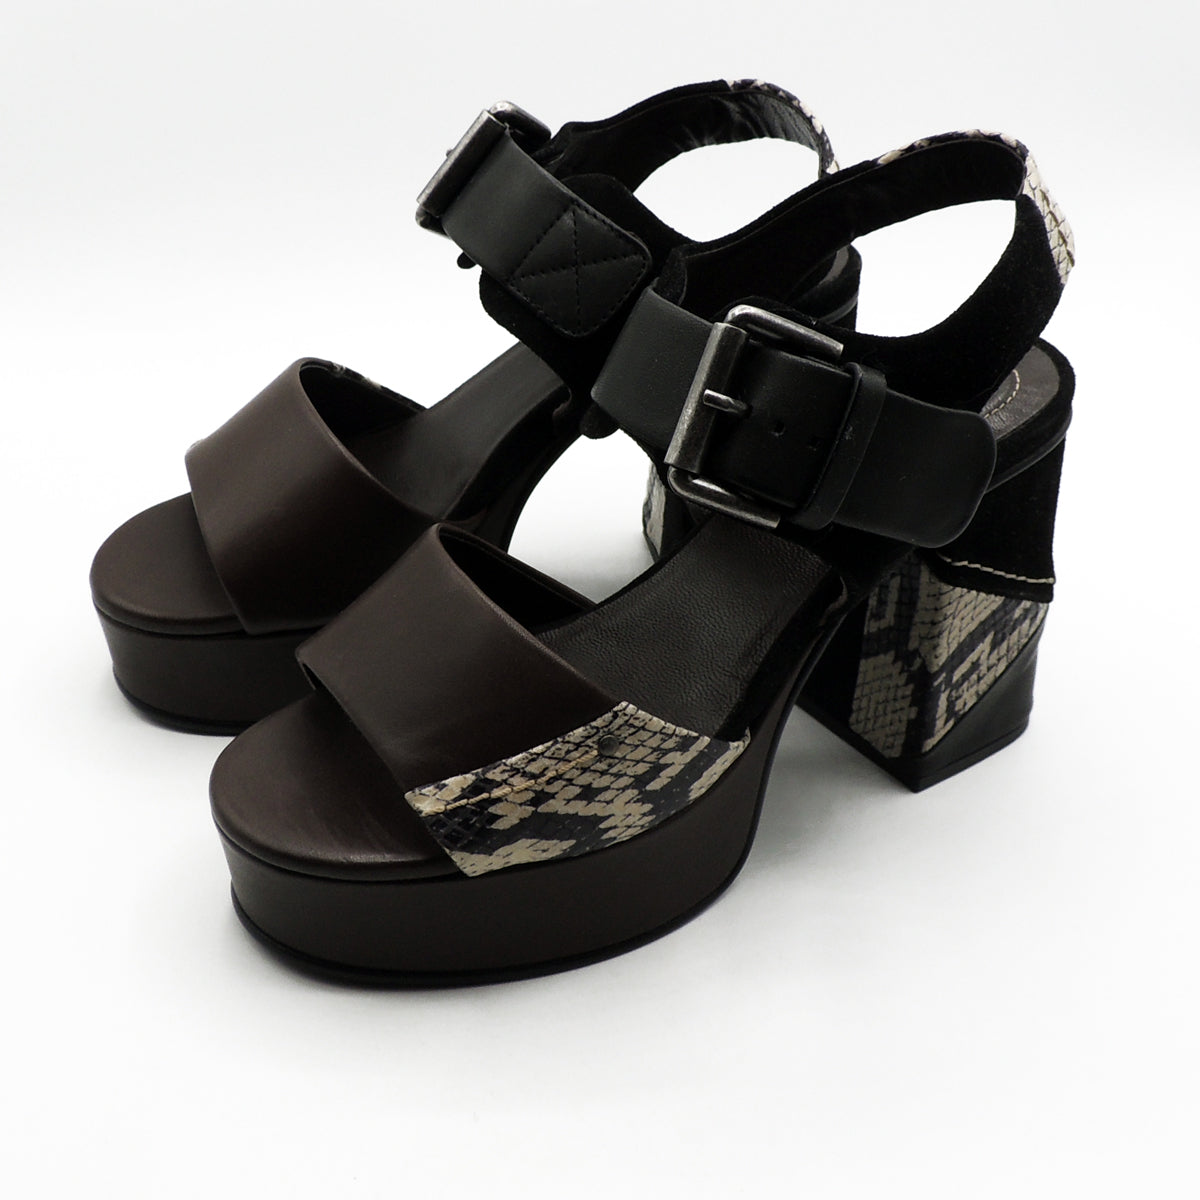 See by Chloé black & python print platform heels size EU 35 / UK 2.5